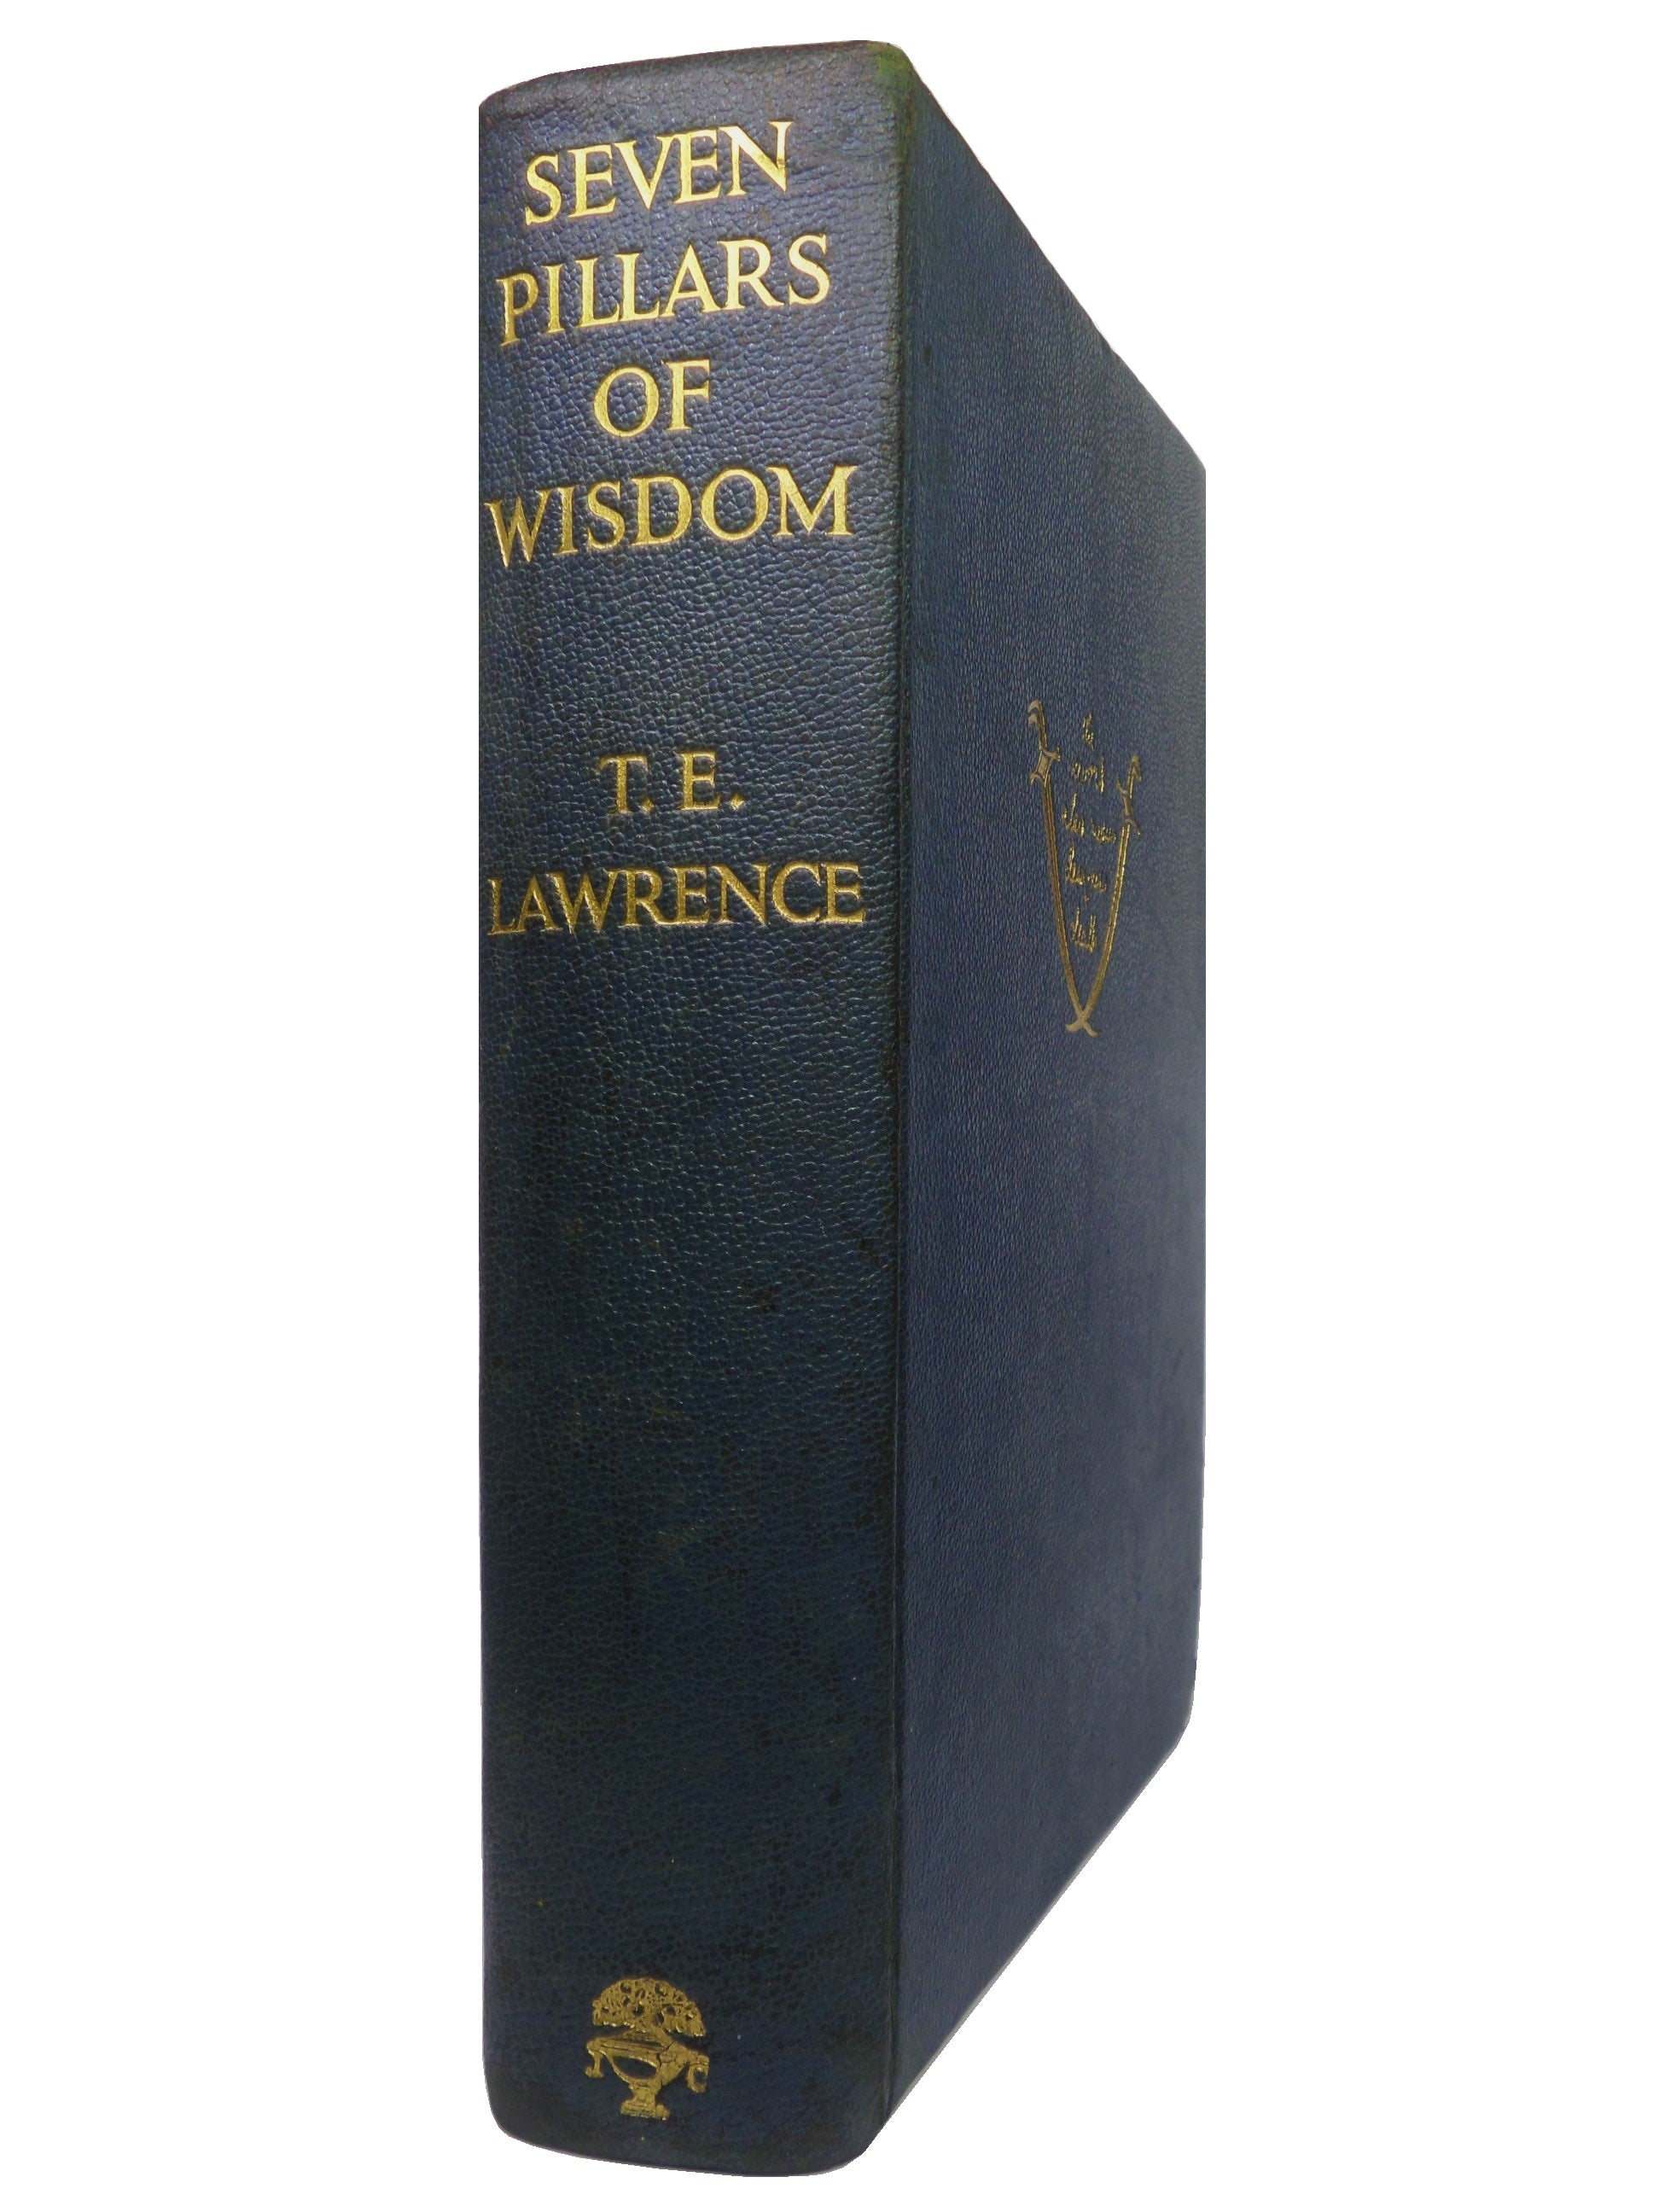 SEVEN PILLARS OF WISDOM 1935 T. E. LAWRENCE, DELUXE MOROCCO BINDING